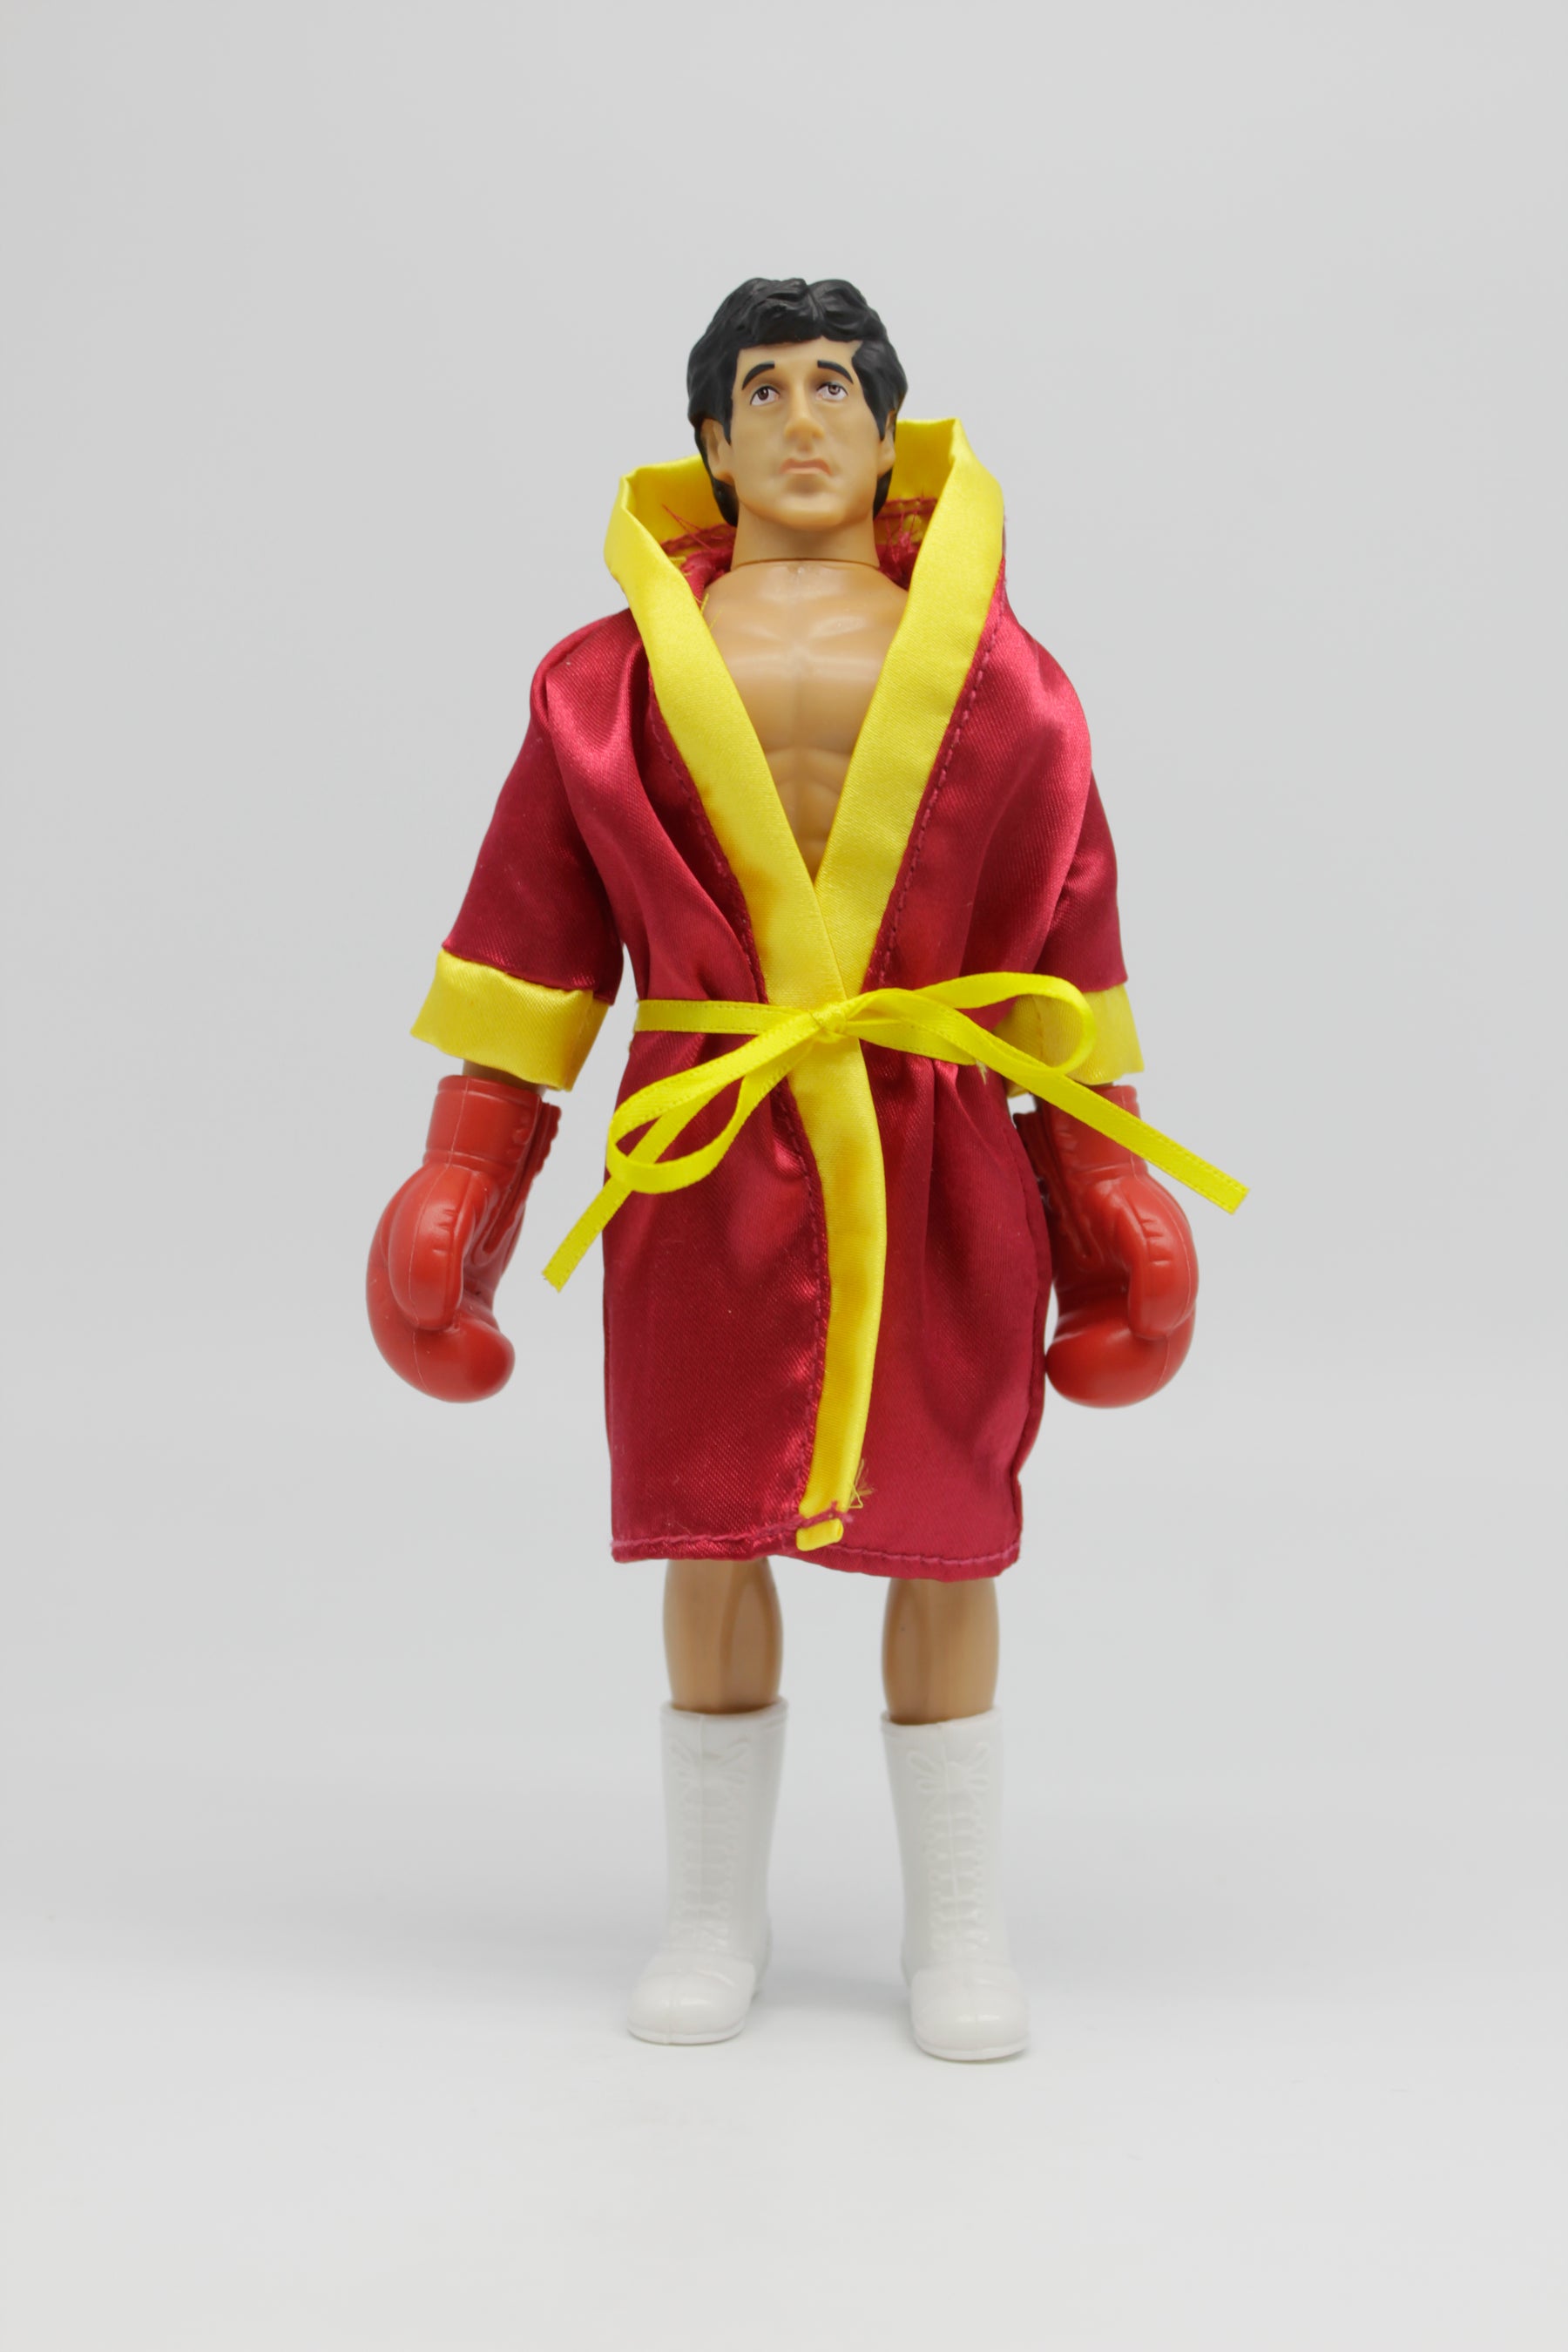 Mego Movies Rocky - Rocky Balboa 8" Action Figure - Zlc Collectibles